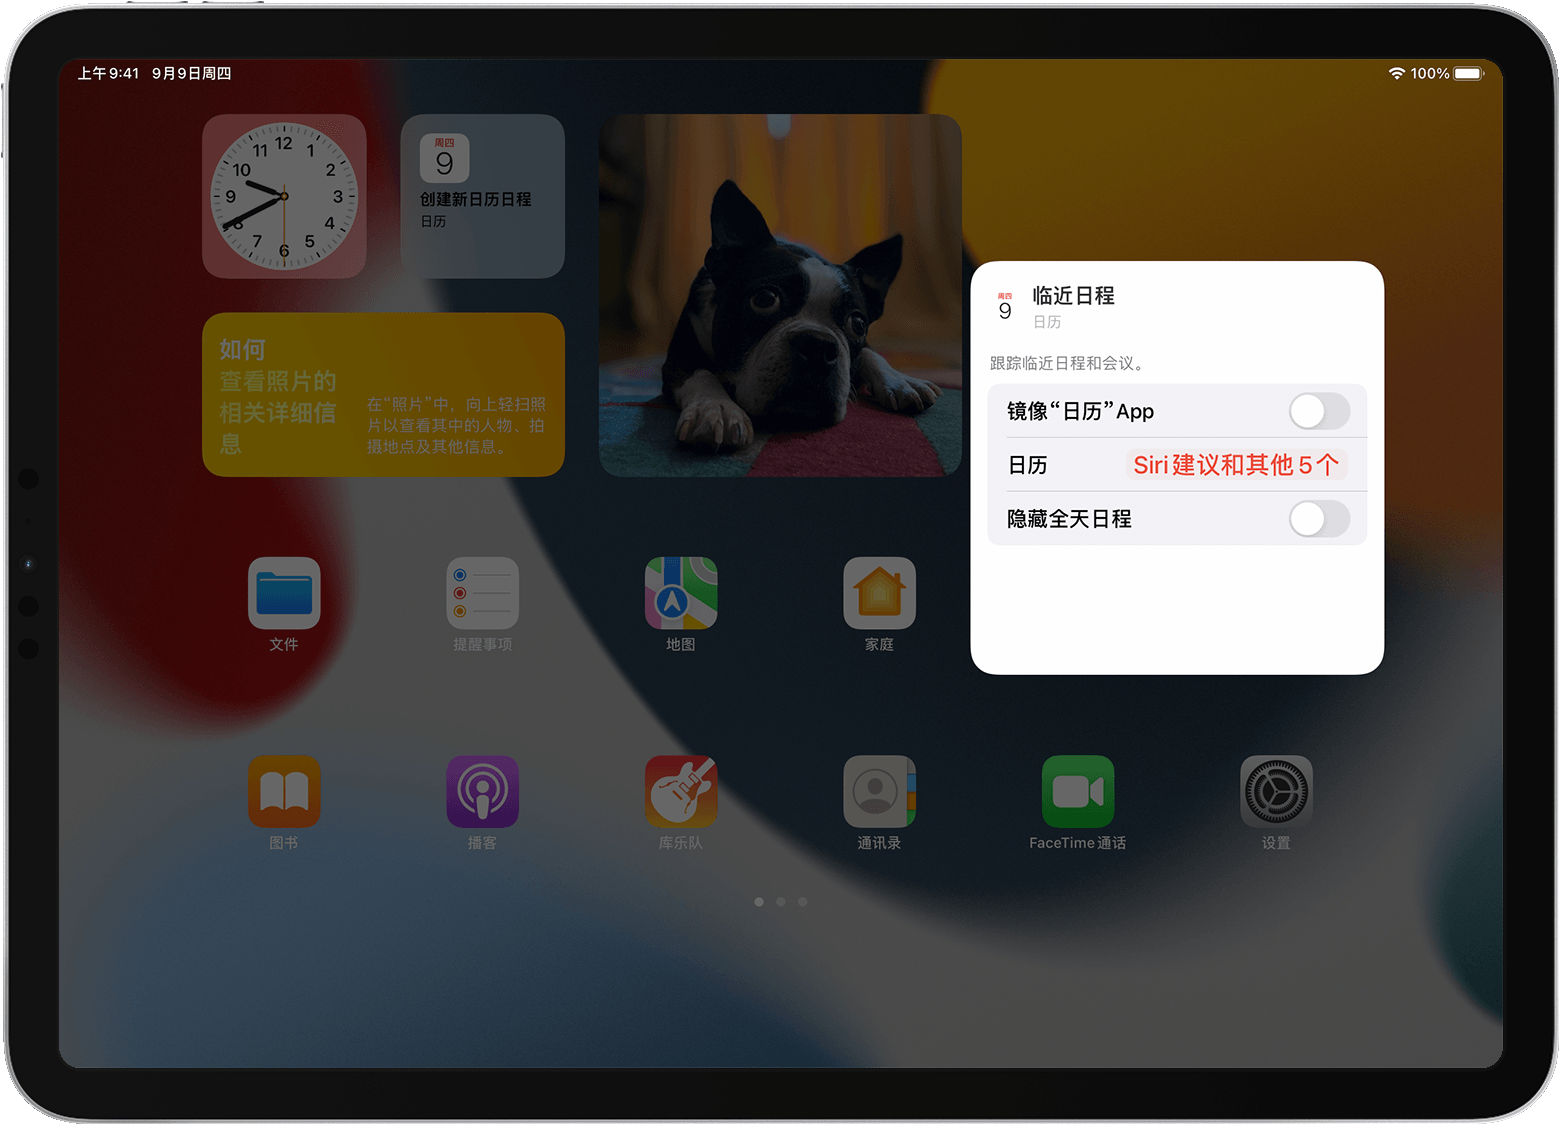 iPad 屏幕显示了“提醒事项”小组件的选项